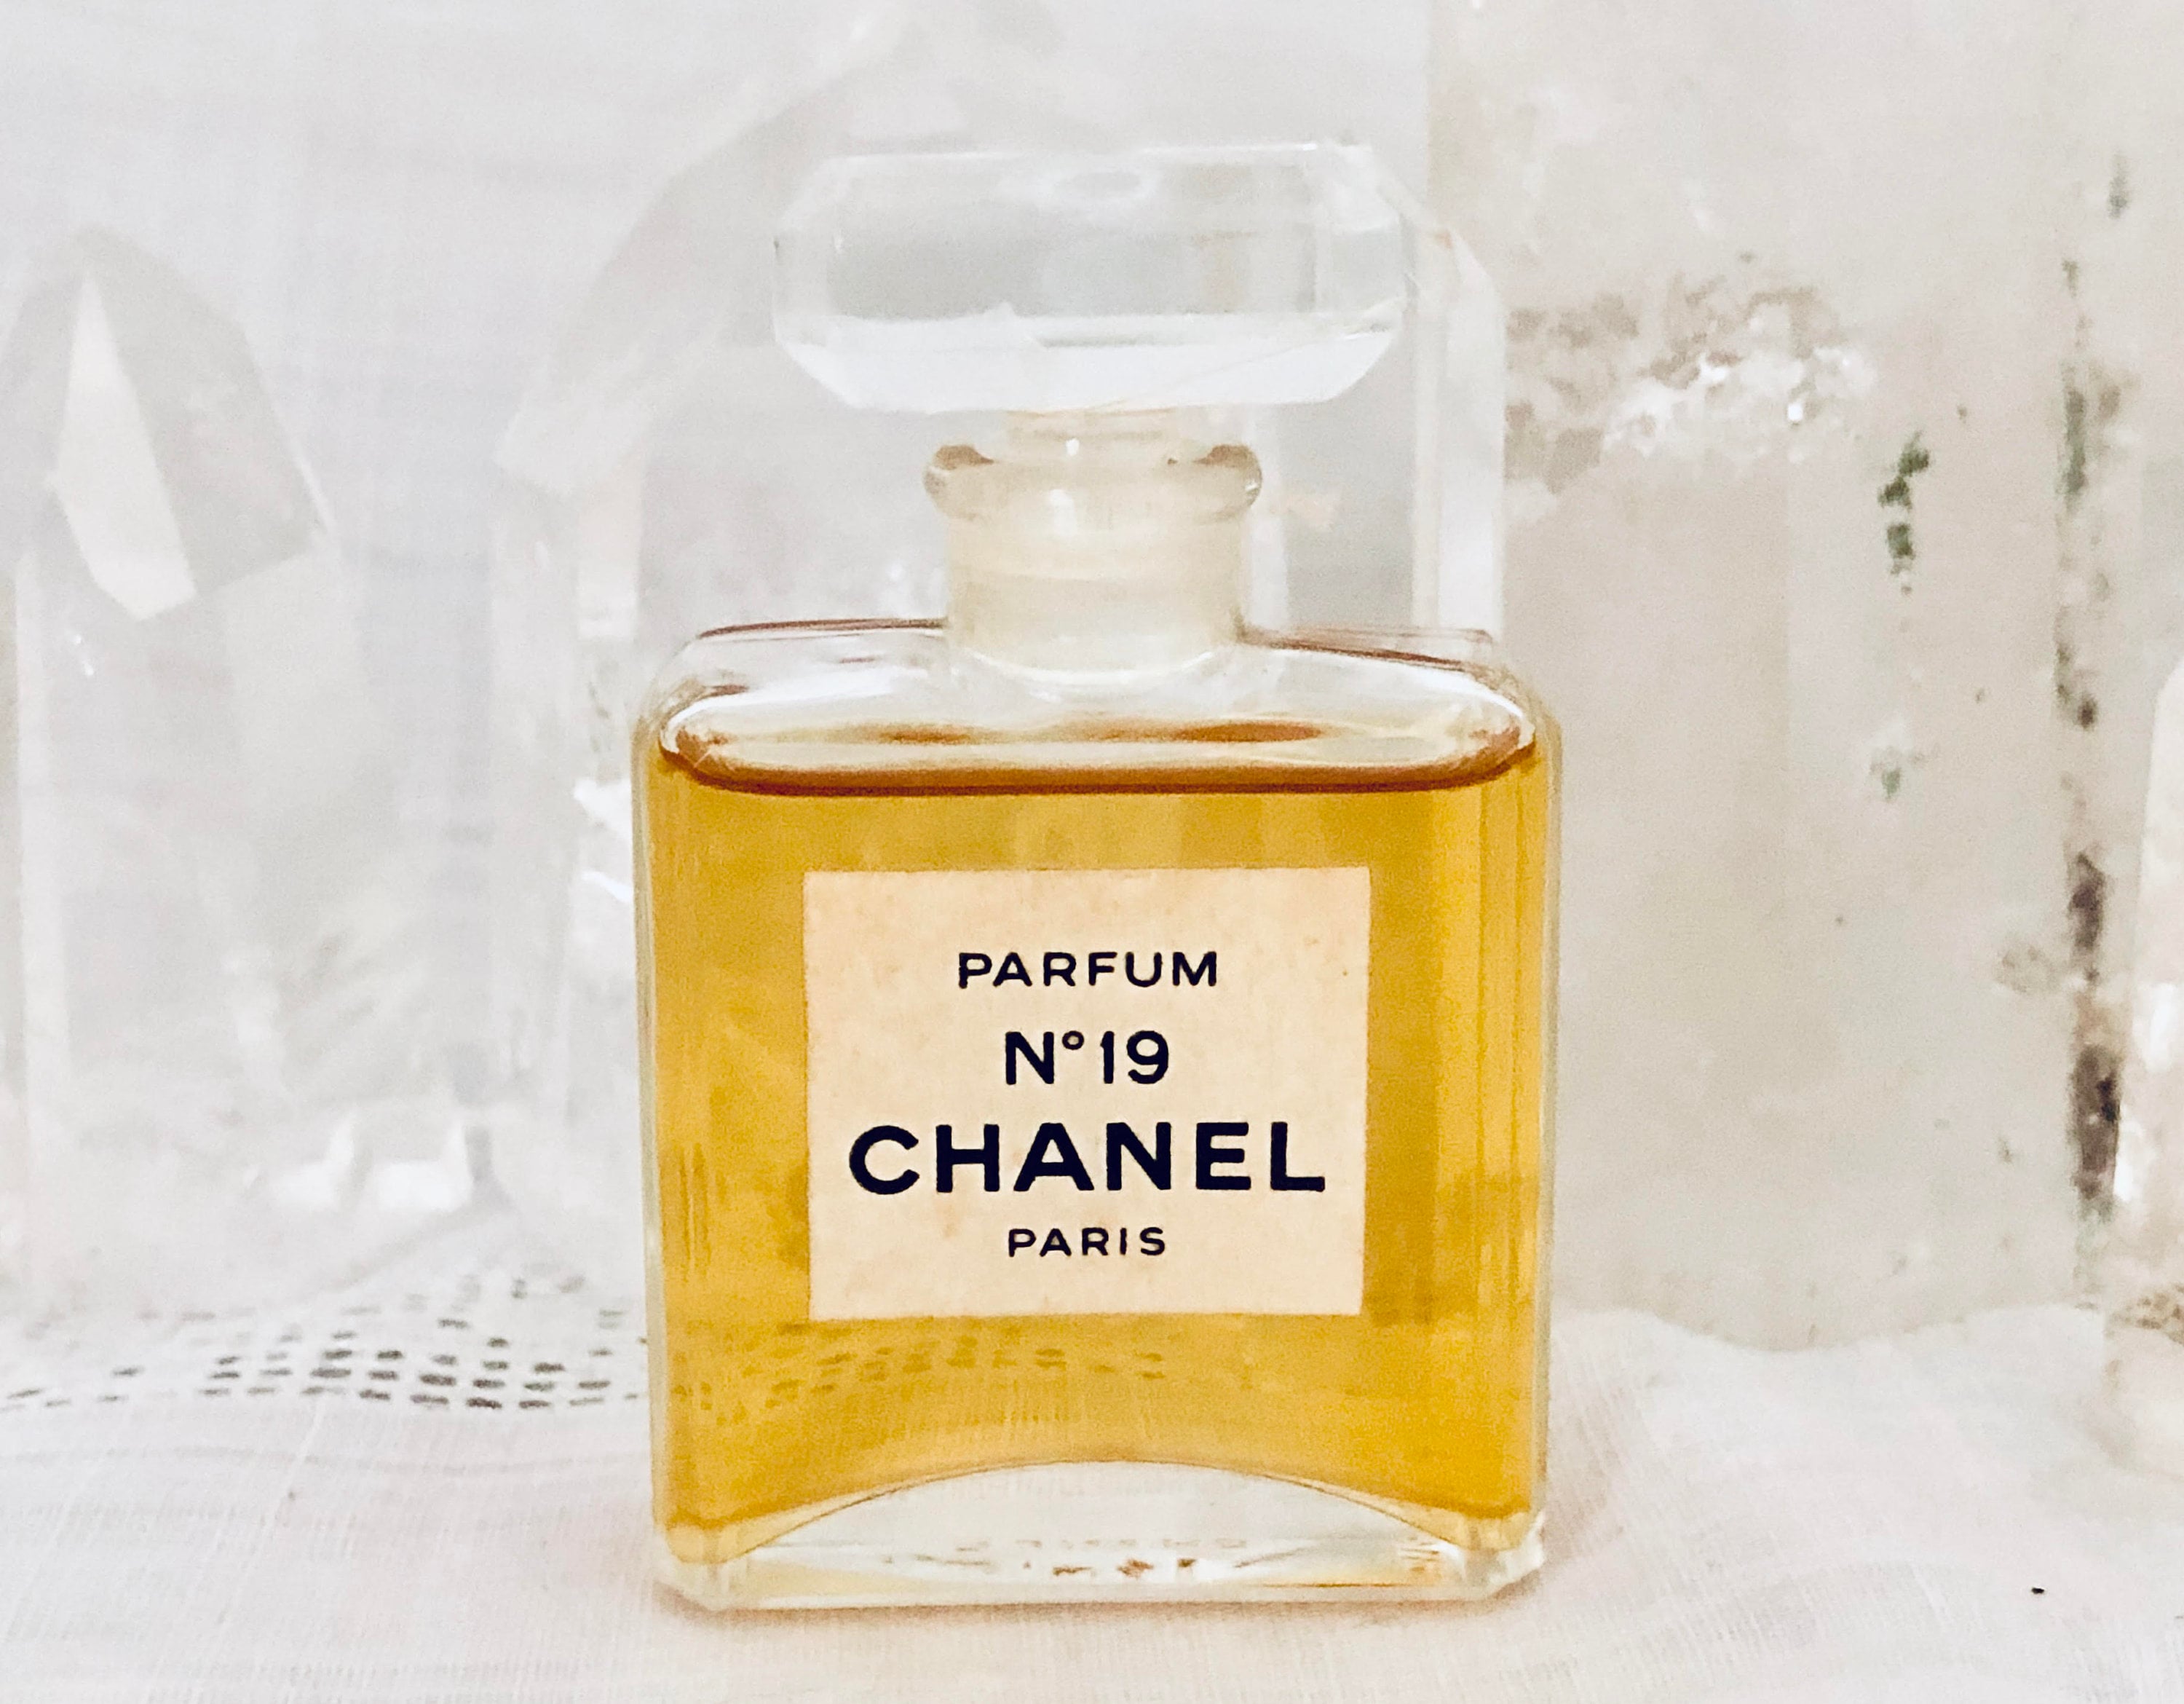 Chanel No. 19 15 Ml. or 0.5 Oz. Flacon Parfum Extrait -  Sweden